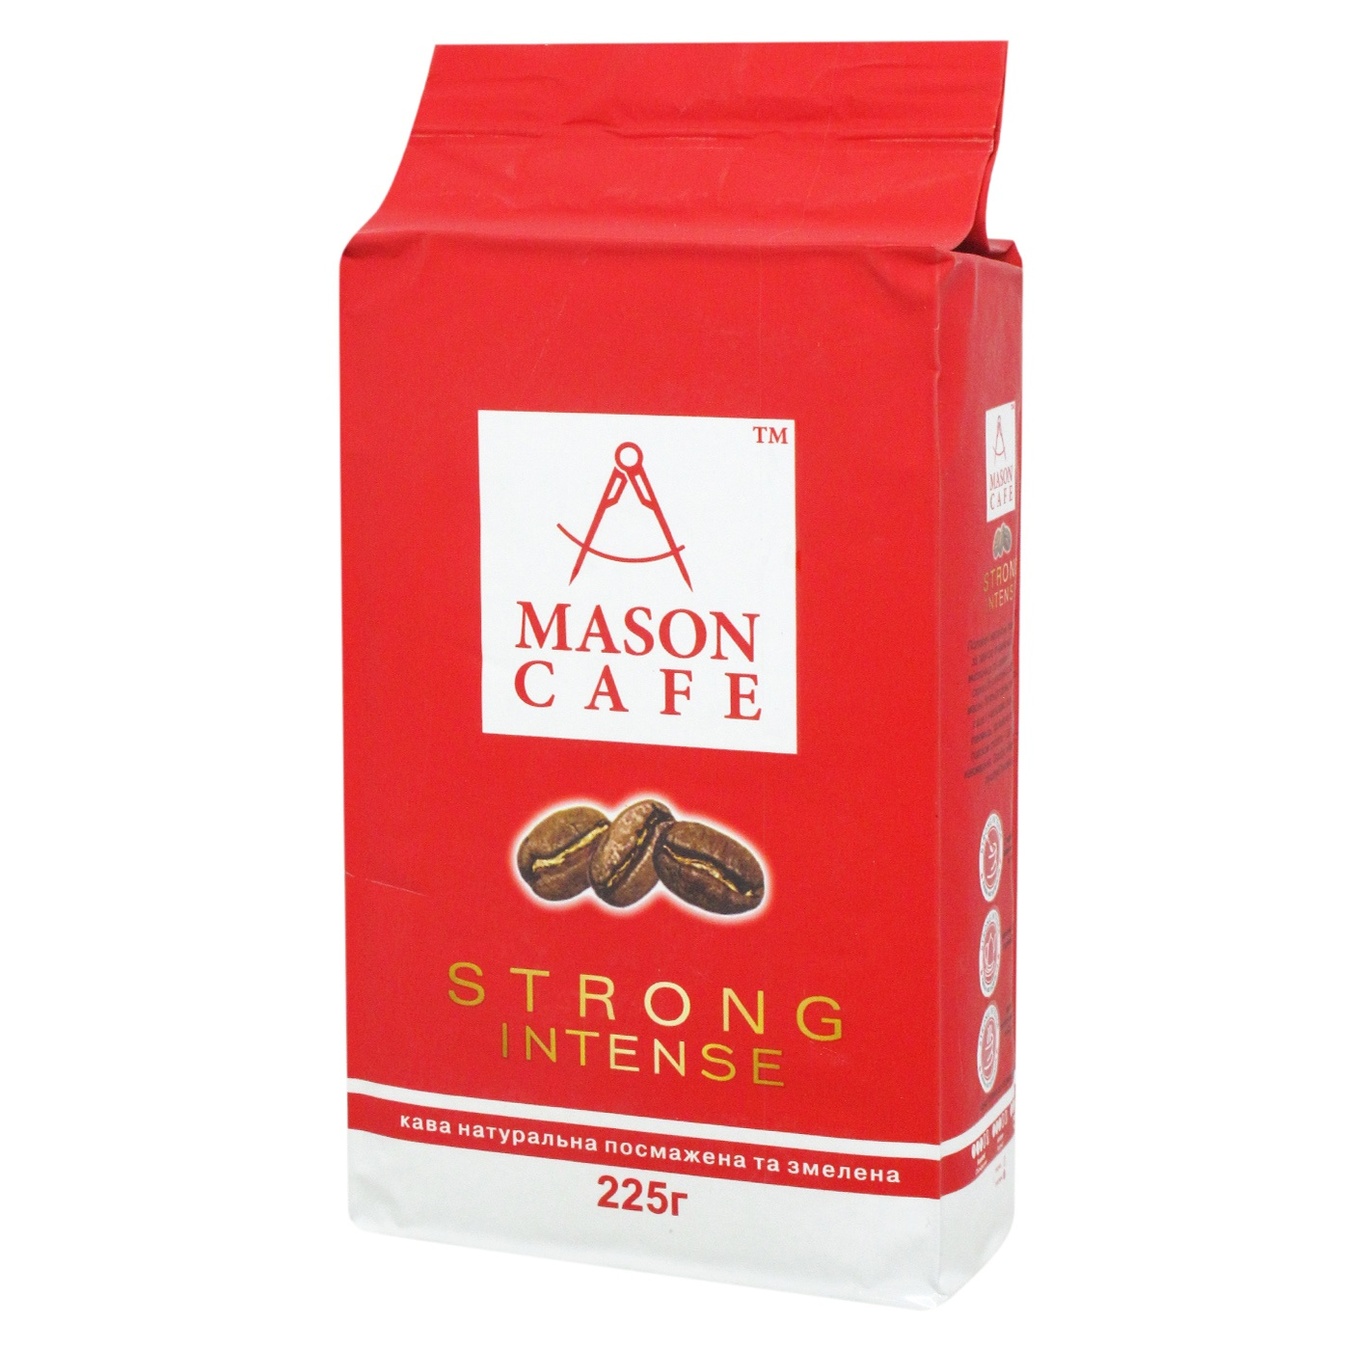 Кава мелена Strong Intense Mason cafe пакет 225г